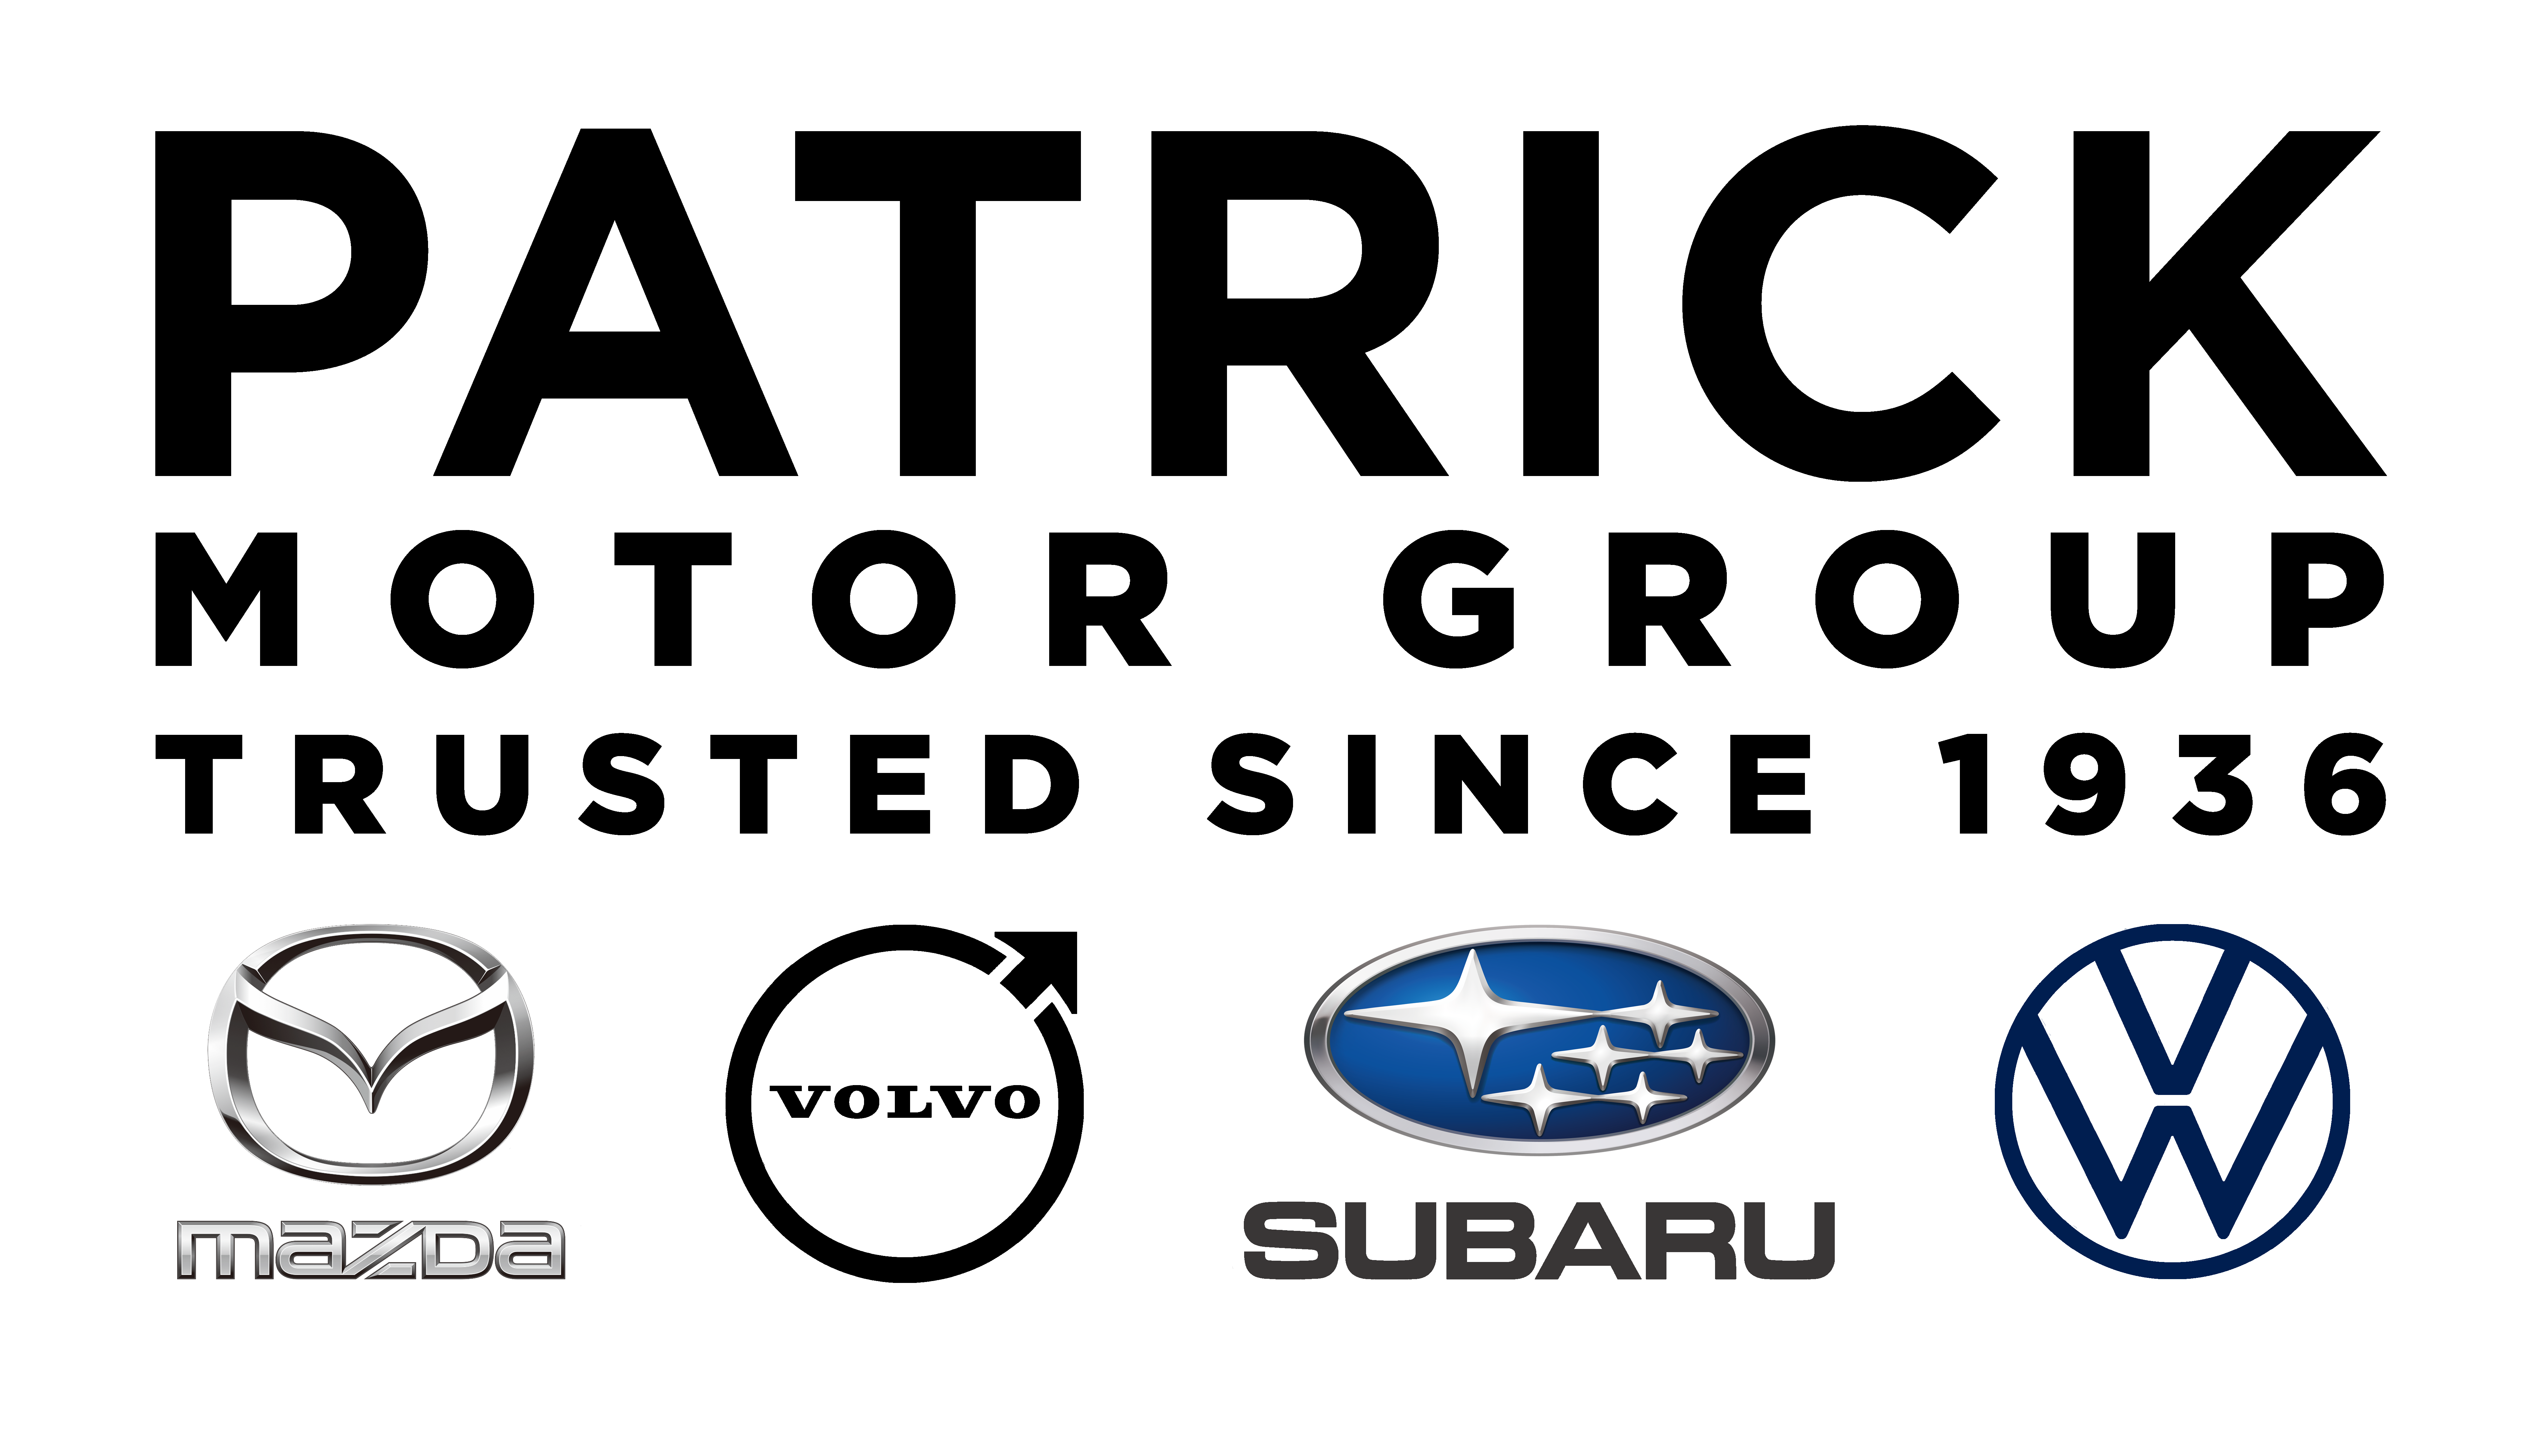 Patrick Motor Group